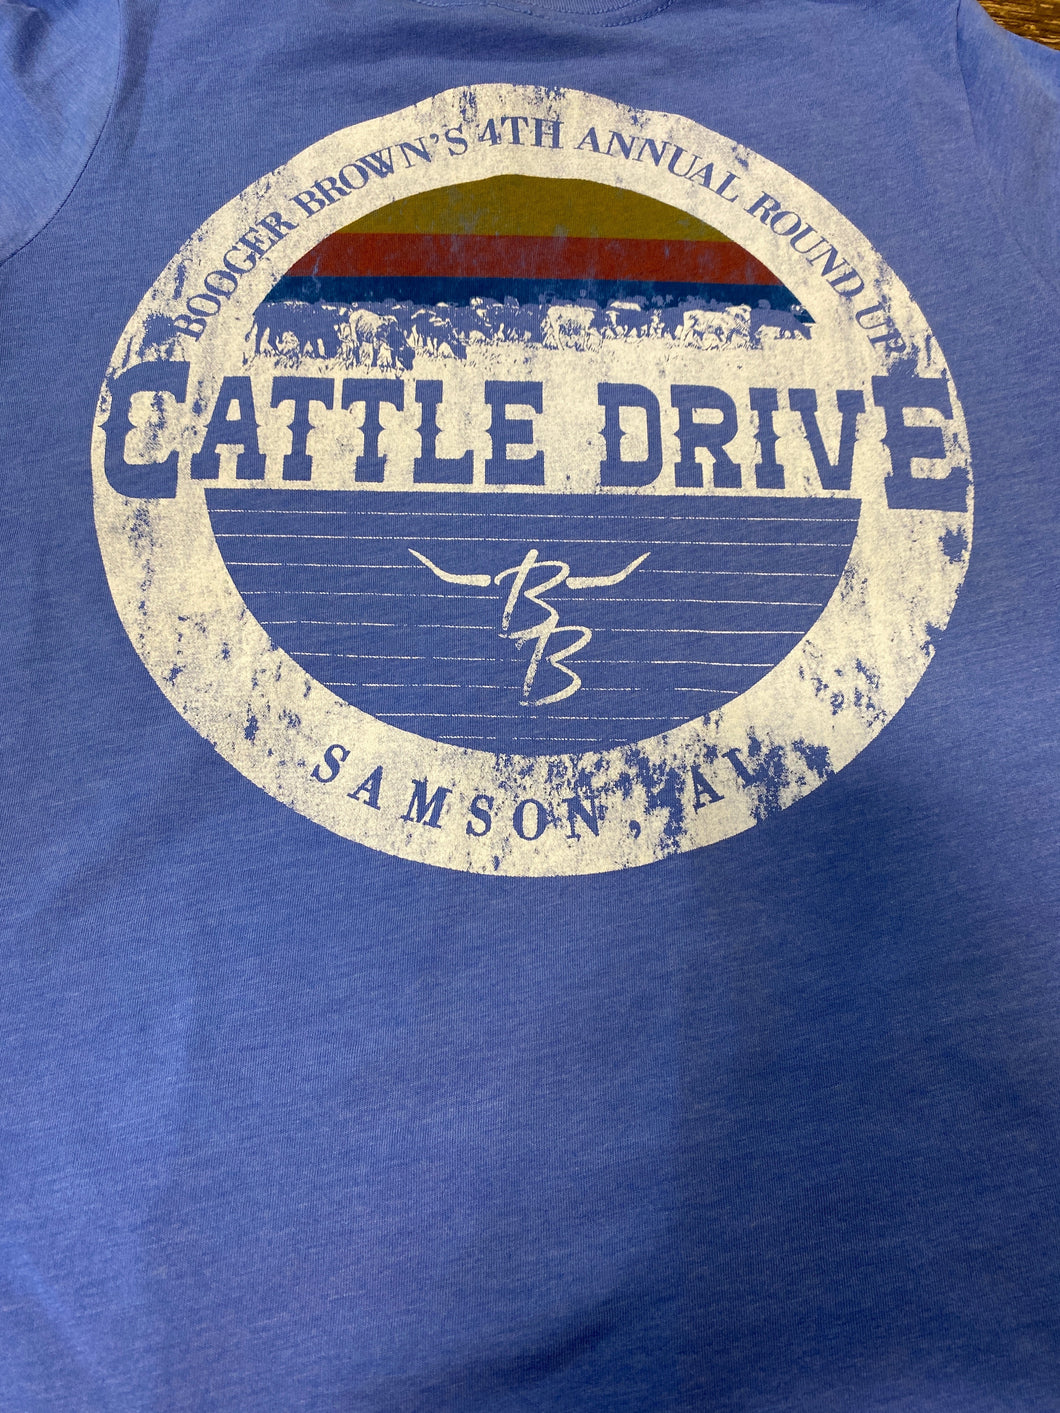 Cattle Drive S-XL 170 Shirts